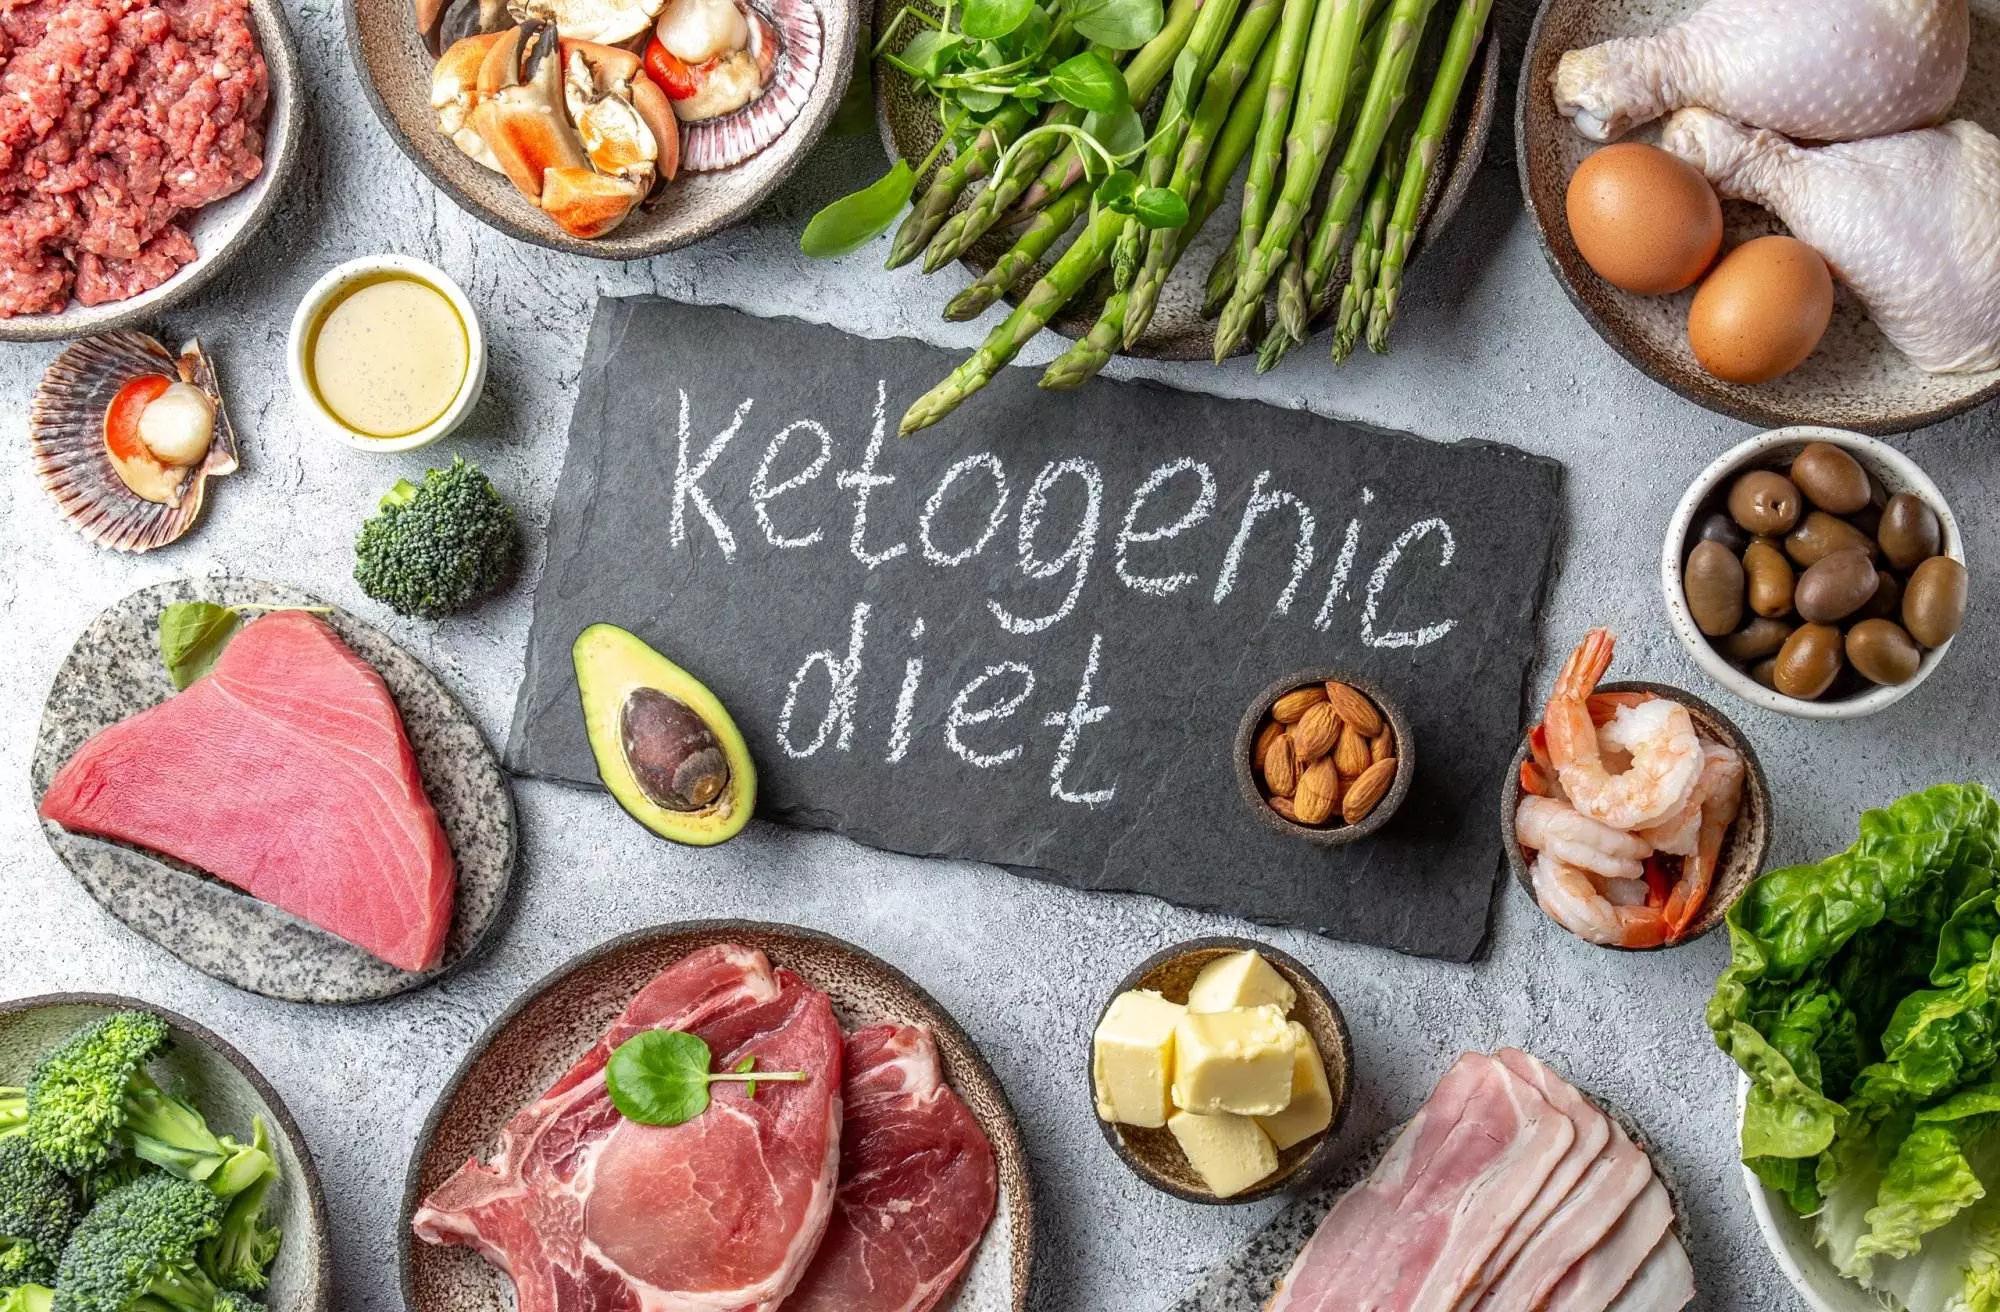 Ketogenic diet foods and ingredients display